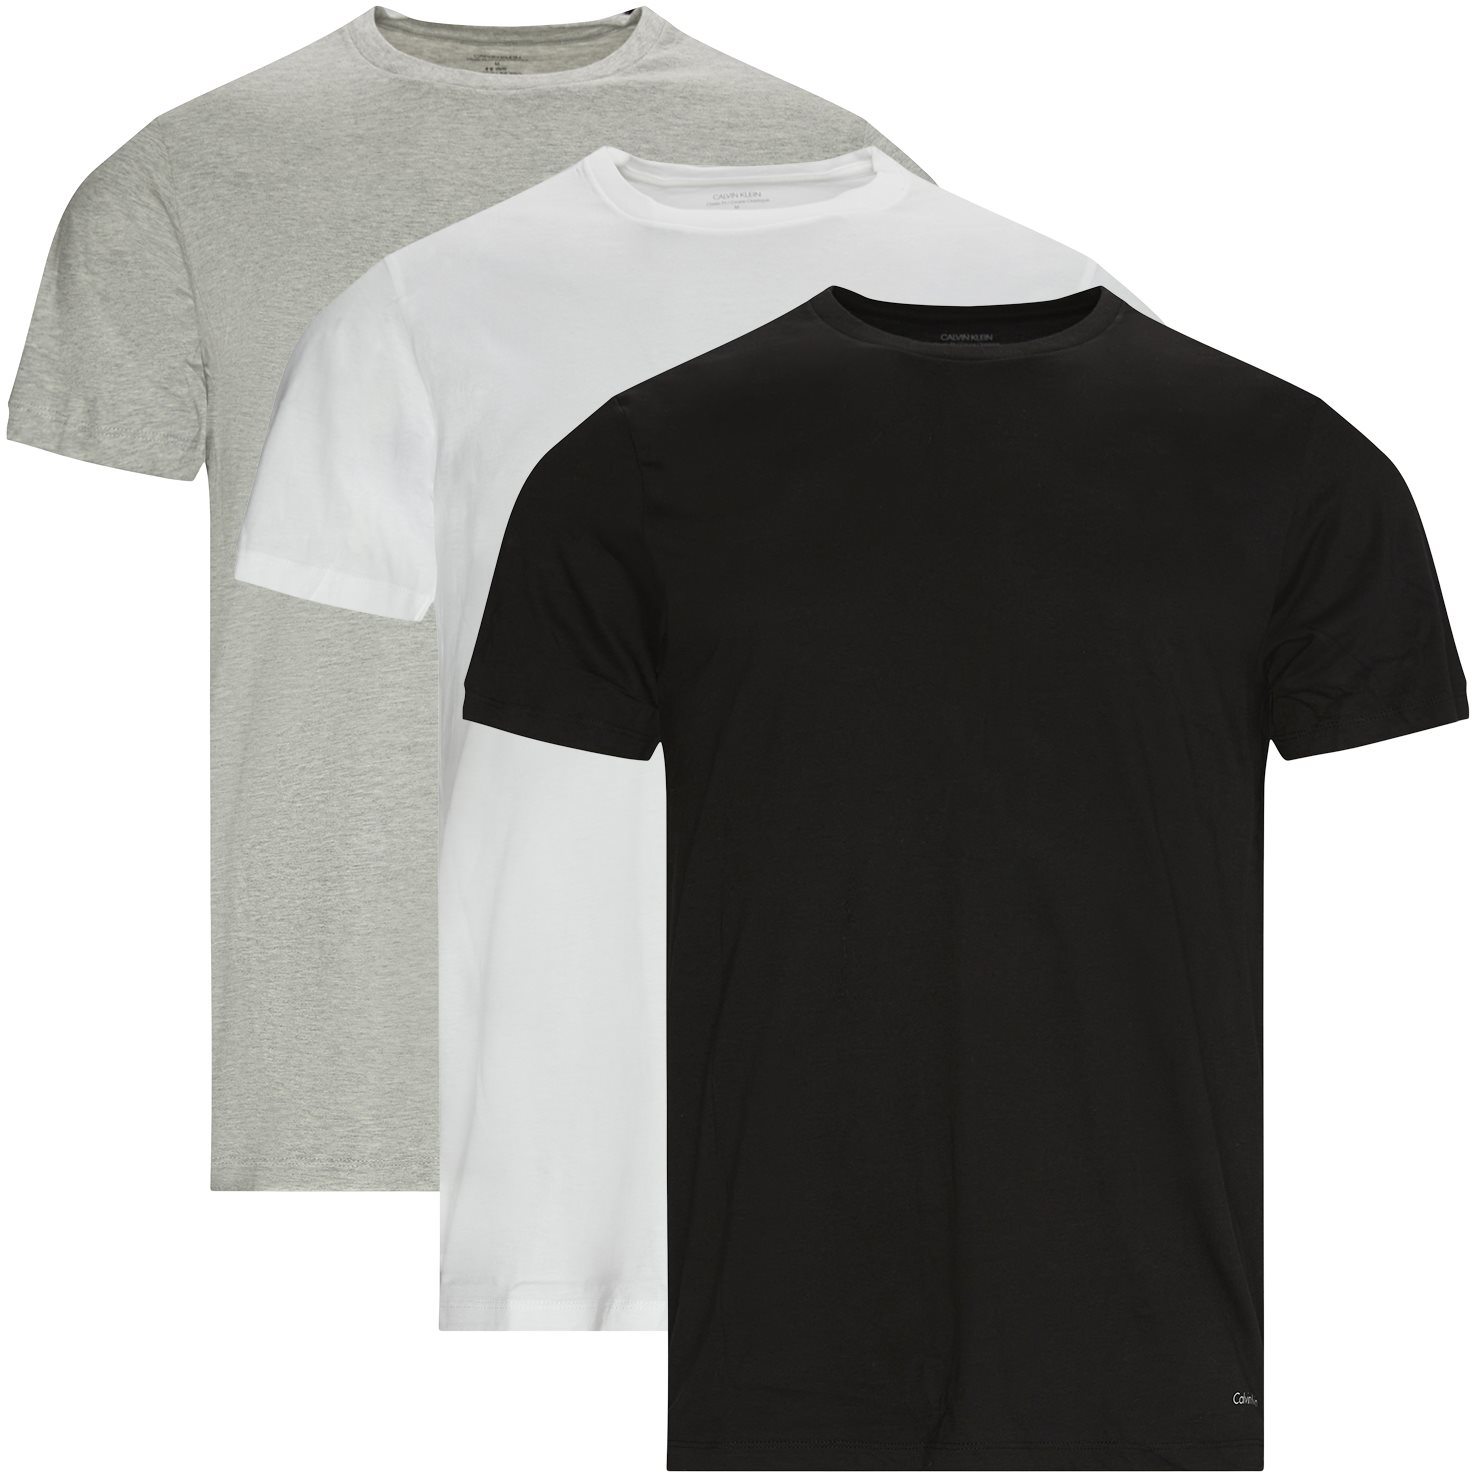 3-pack Crewneck T-shirts - T-shirts - Classic fit - Multi